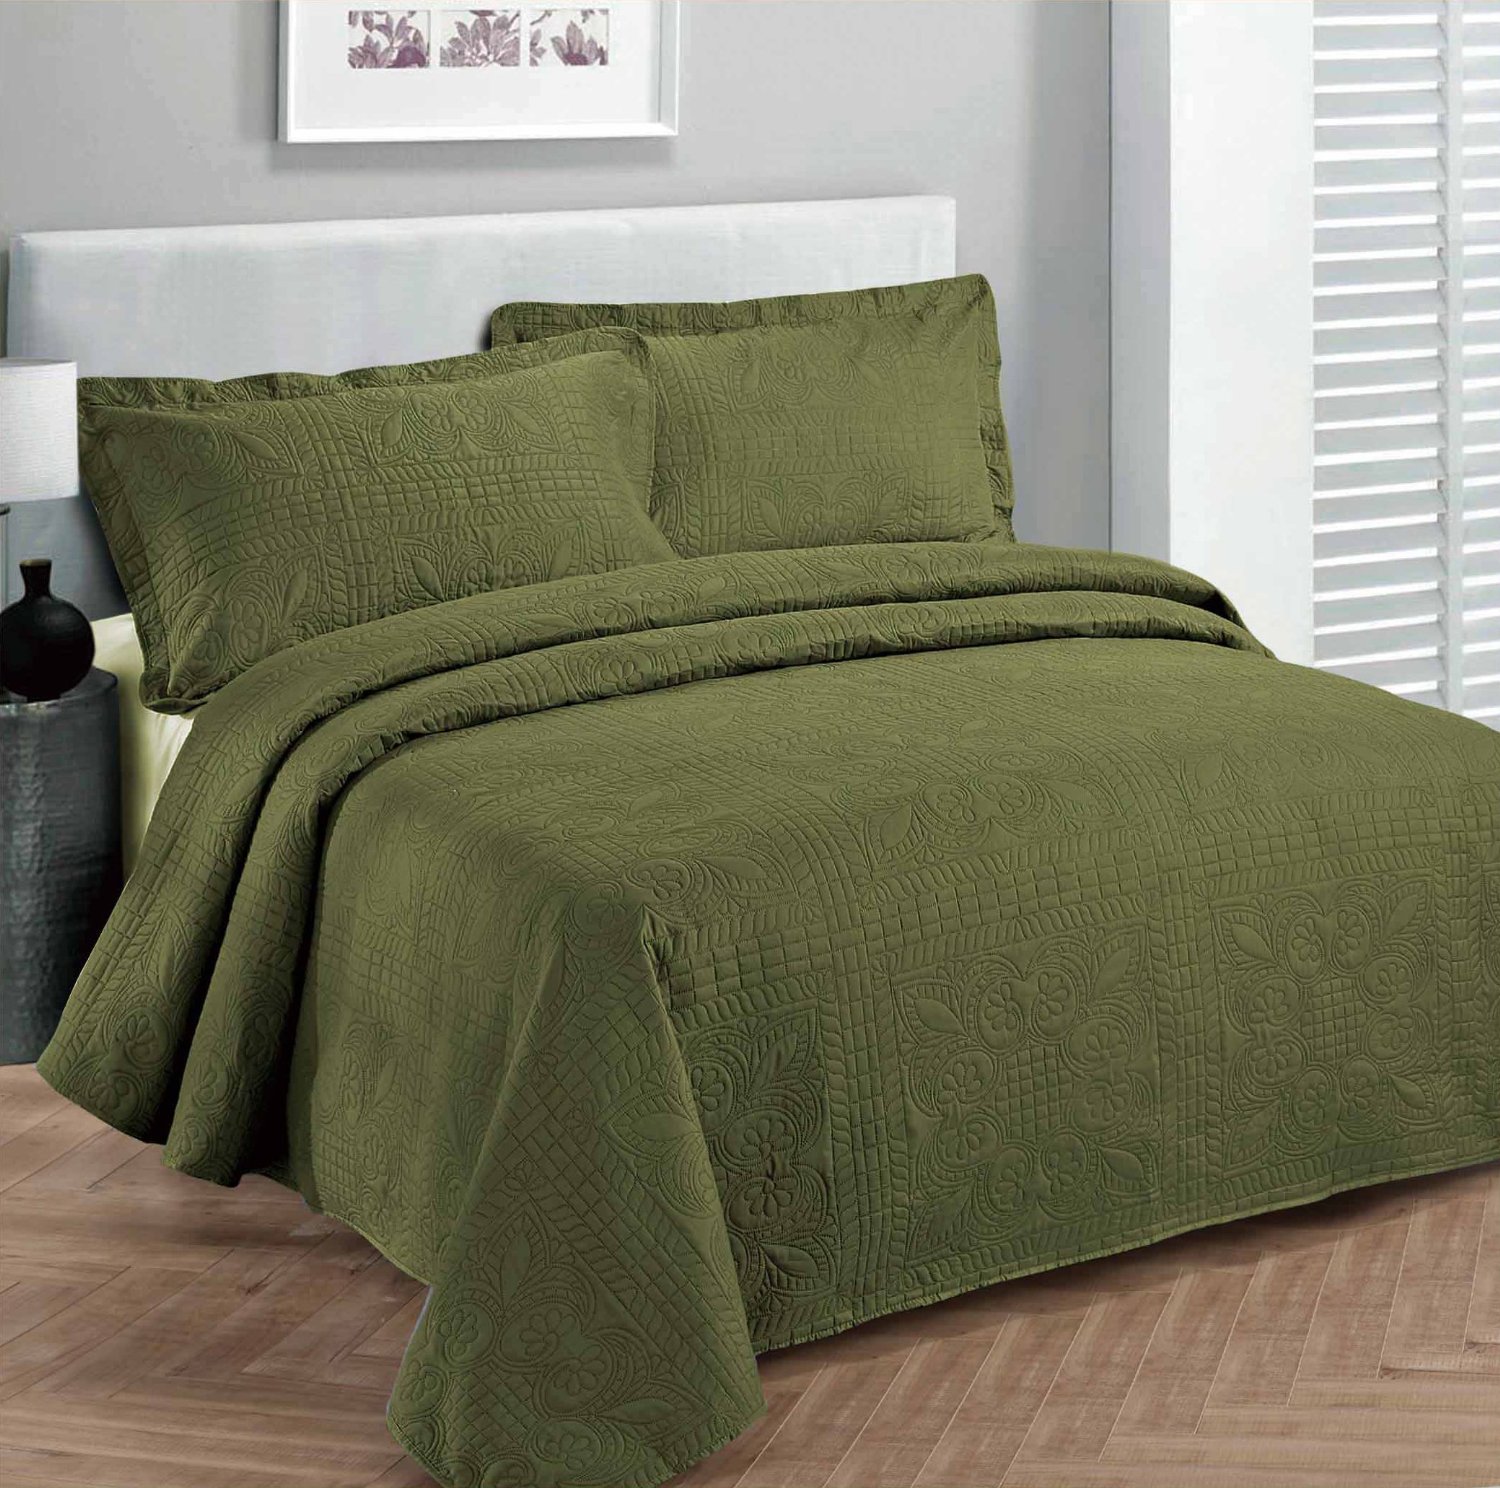 Olive green bedspread